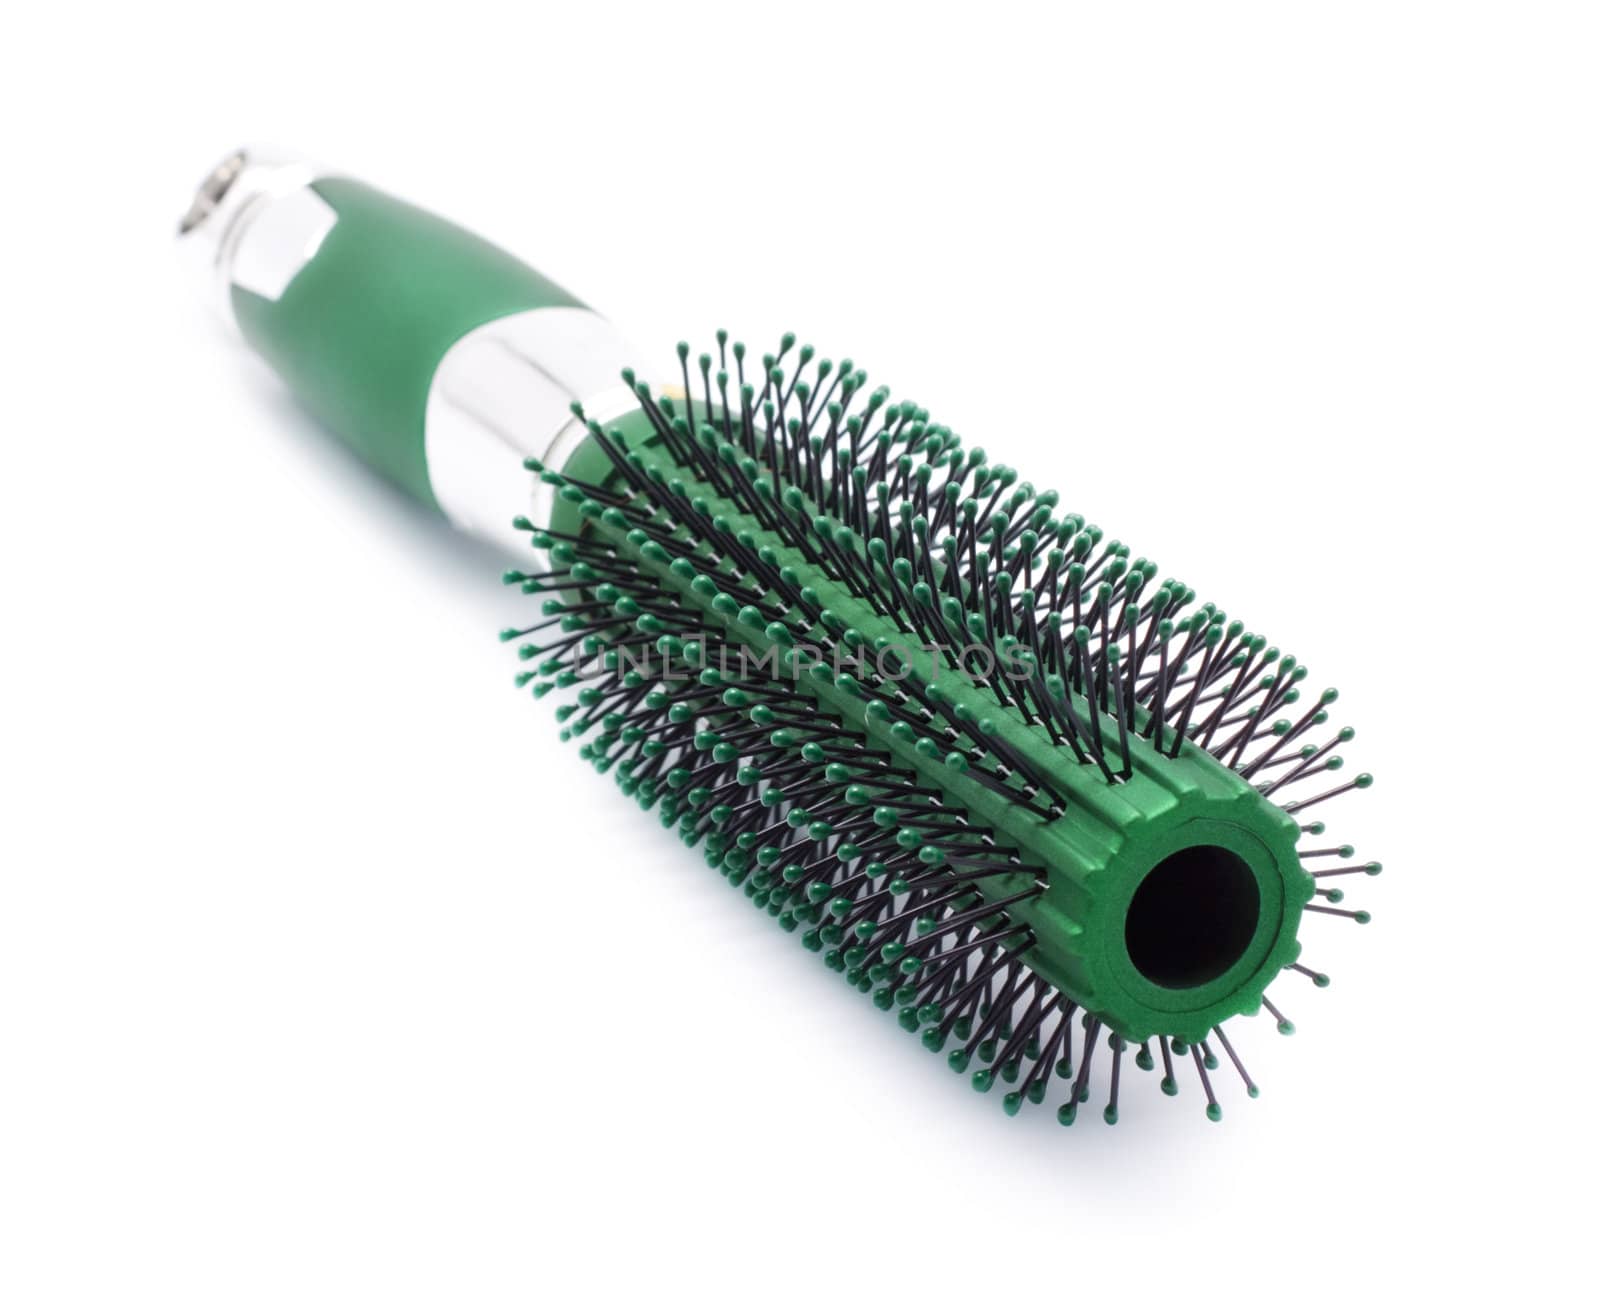 green hair brush isolated on white background